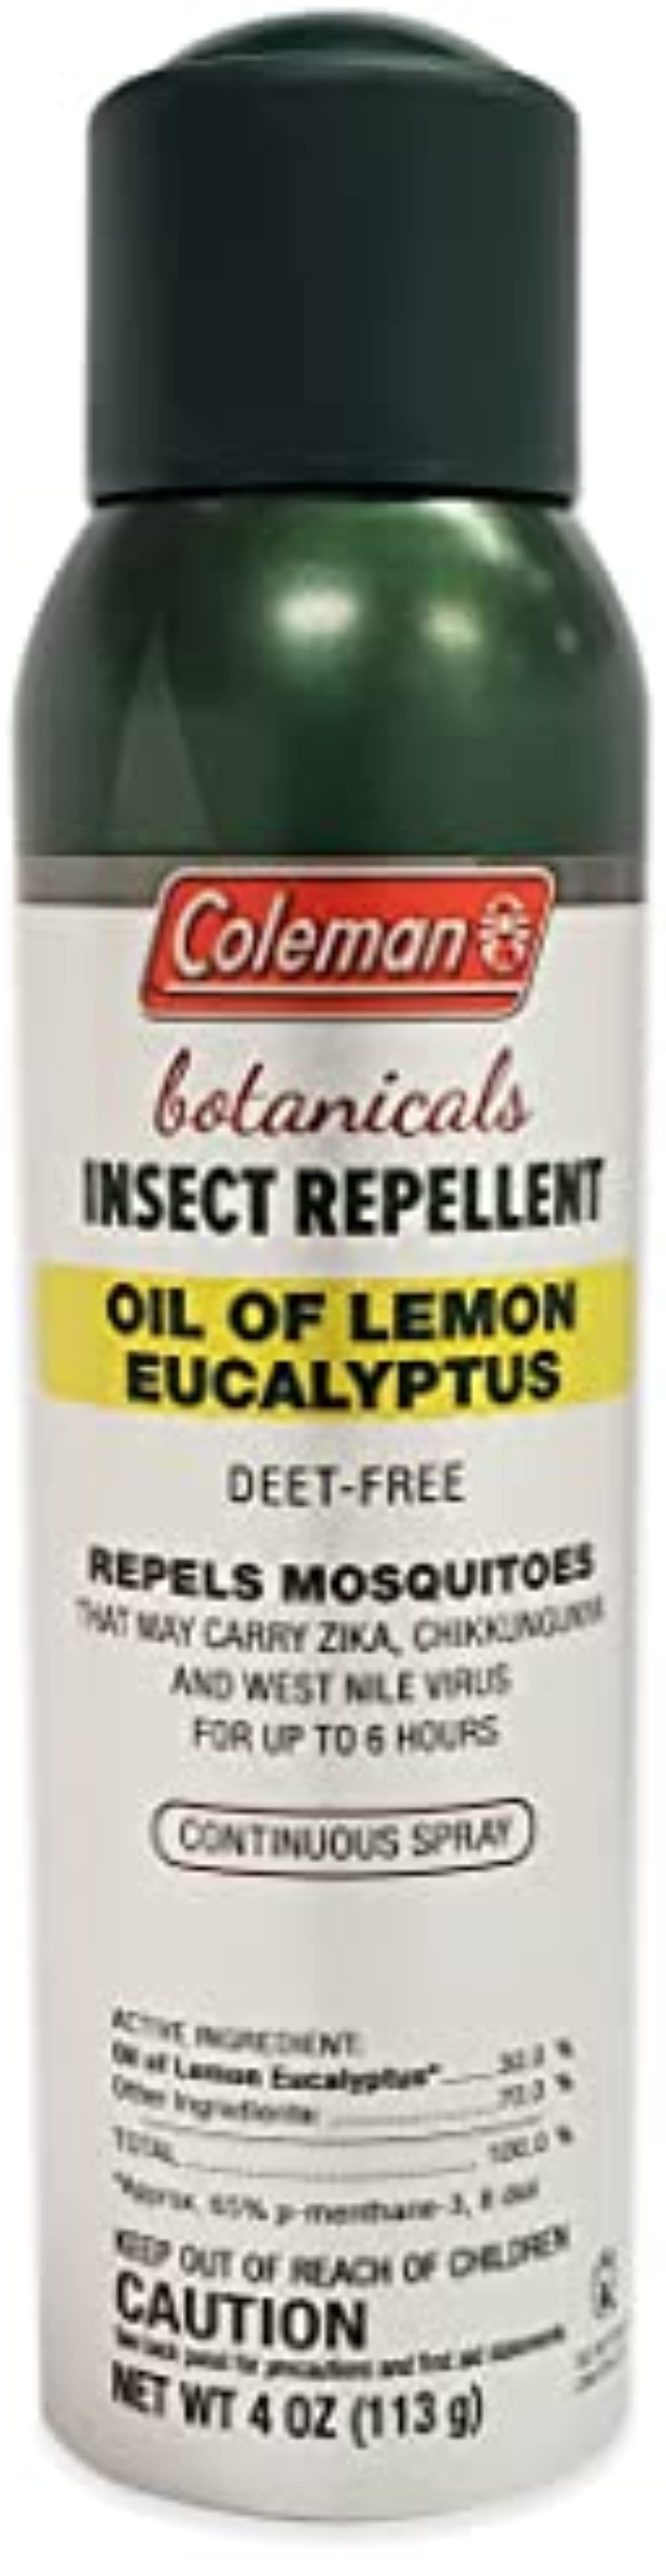 Coleman Naturally Based DEET Free Lemon Eucalyptus Insect Repellent Spray - 4 oz